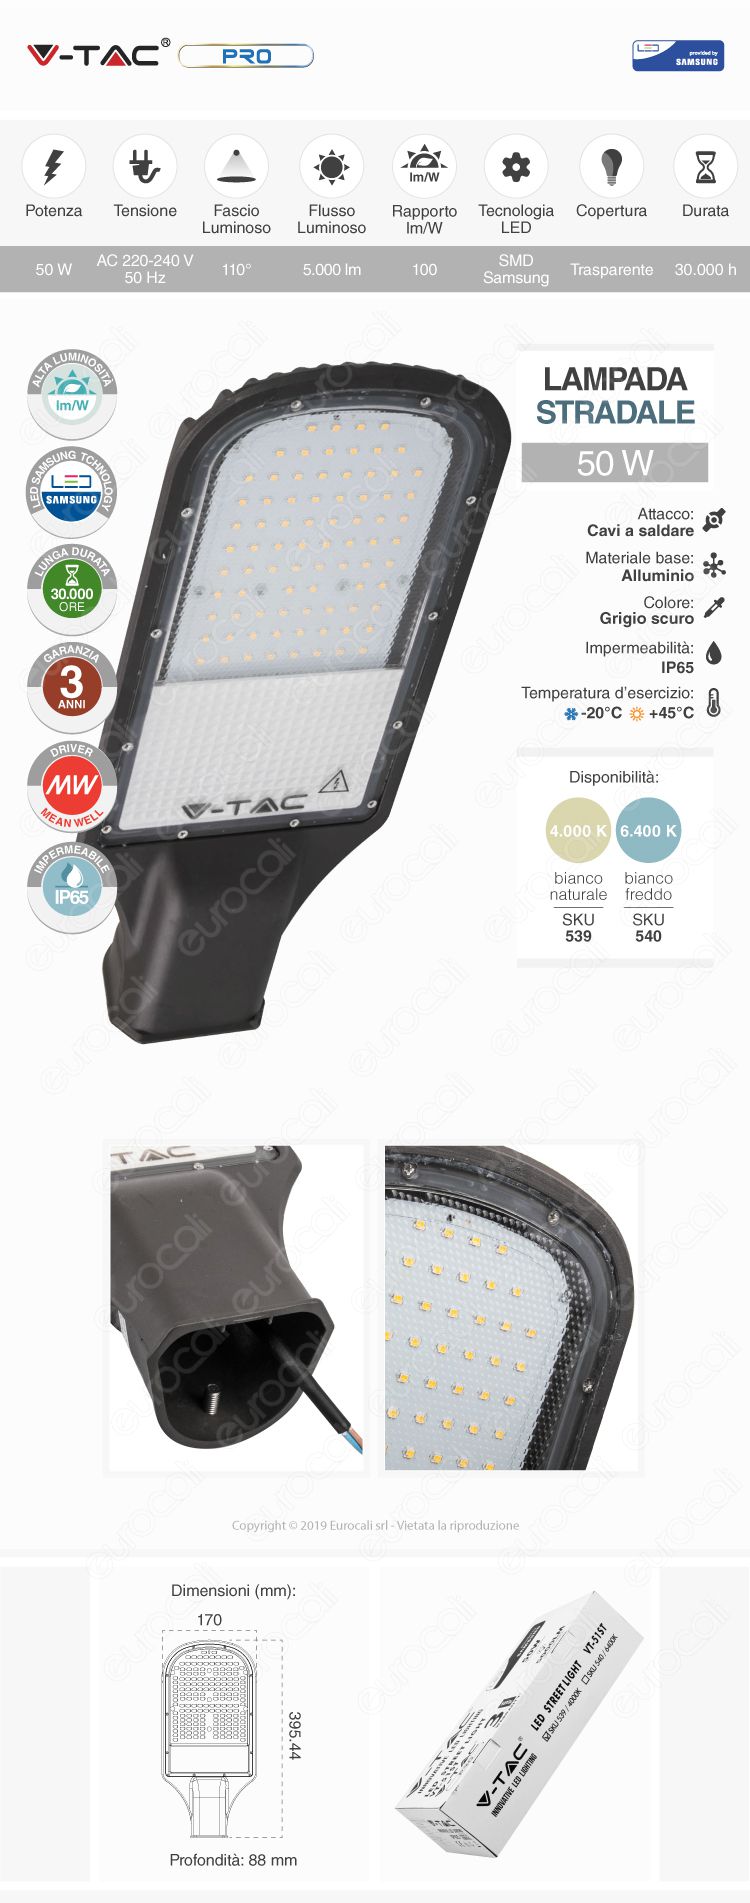 V-Tac PRO VT-51ST Lampada Stradale LED 50W Lampione SMD Chip Samsung